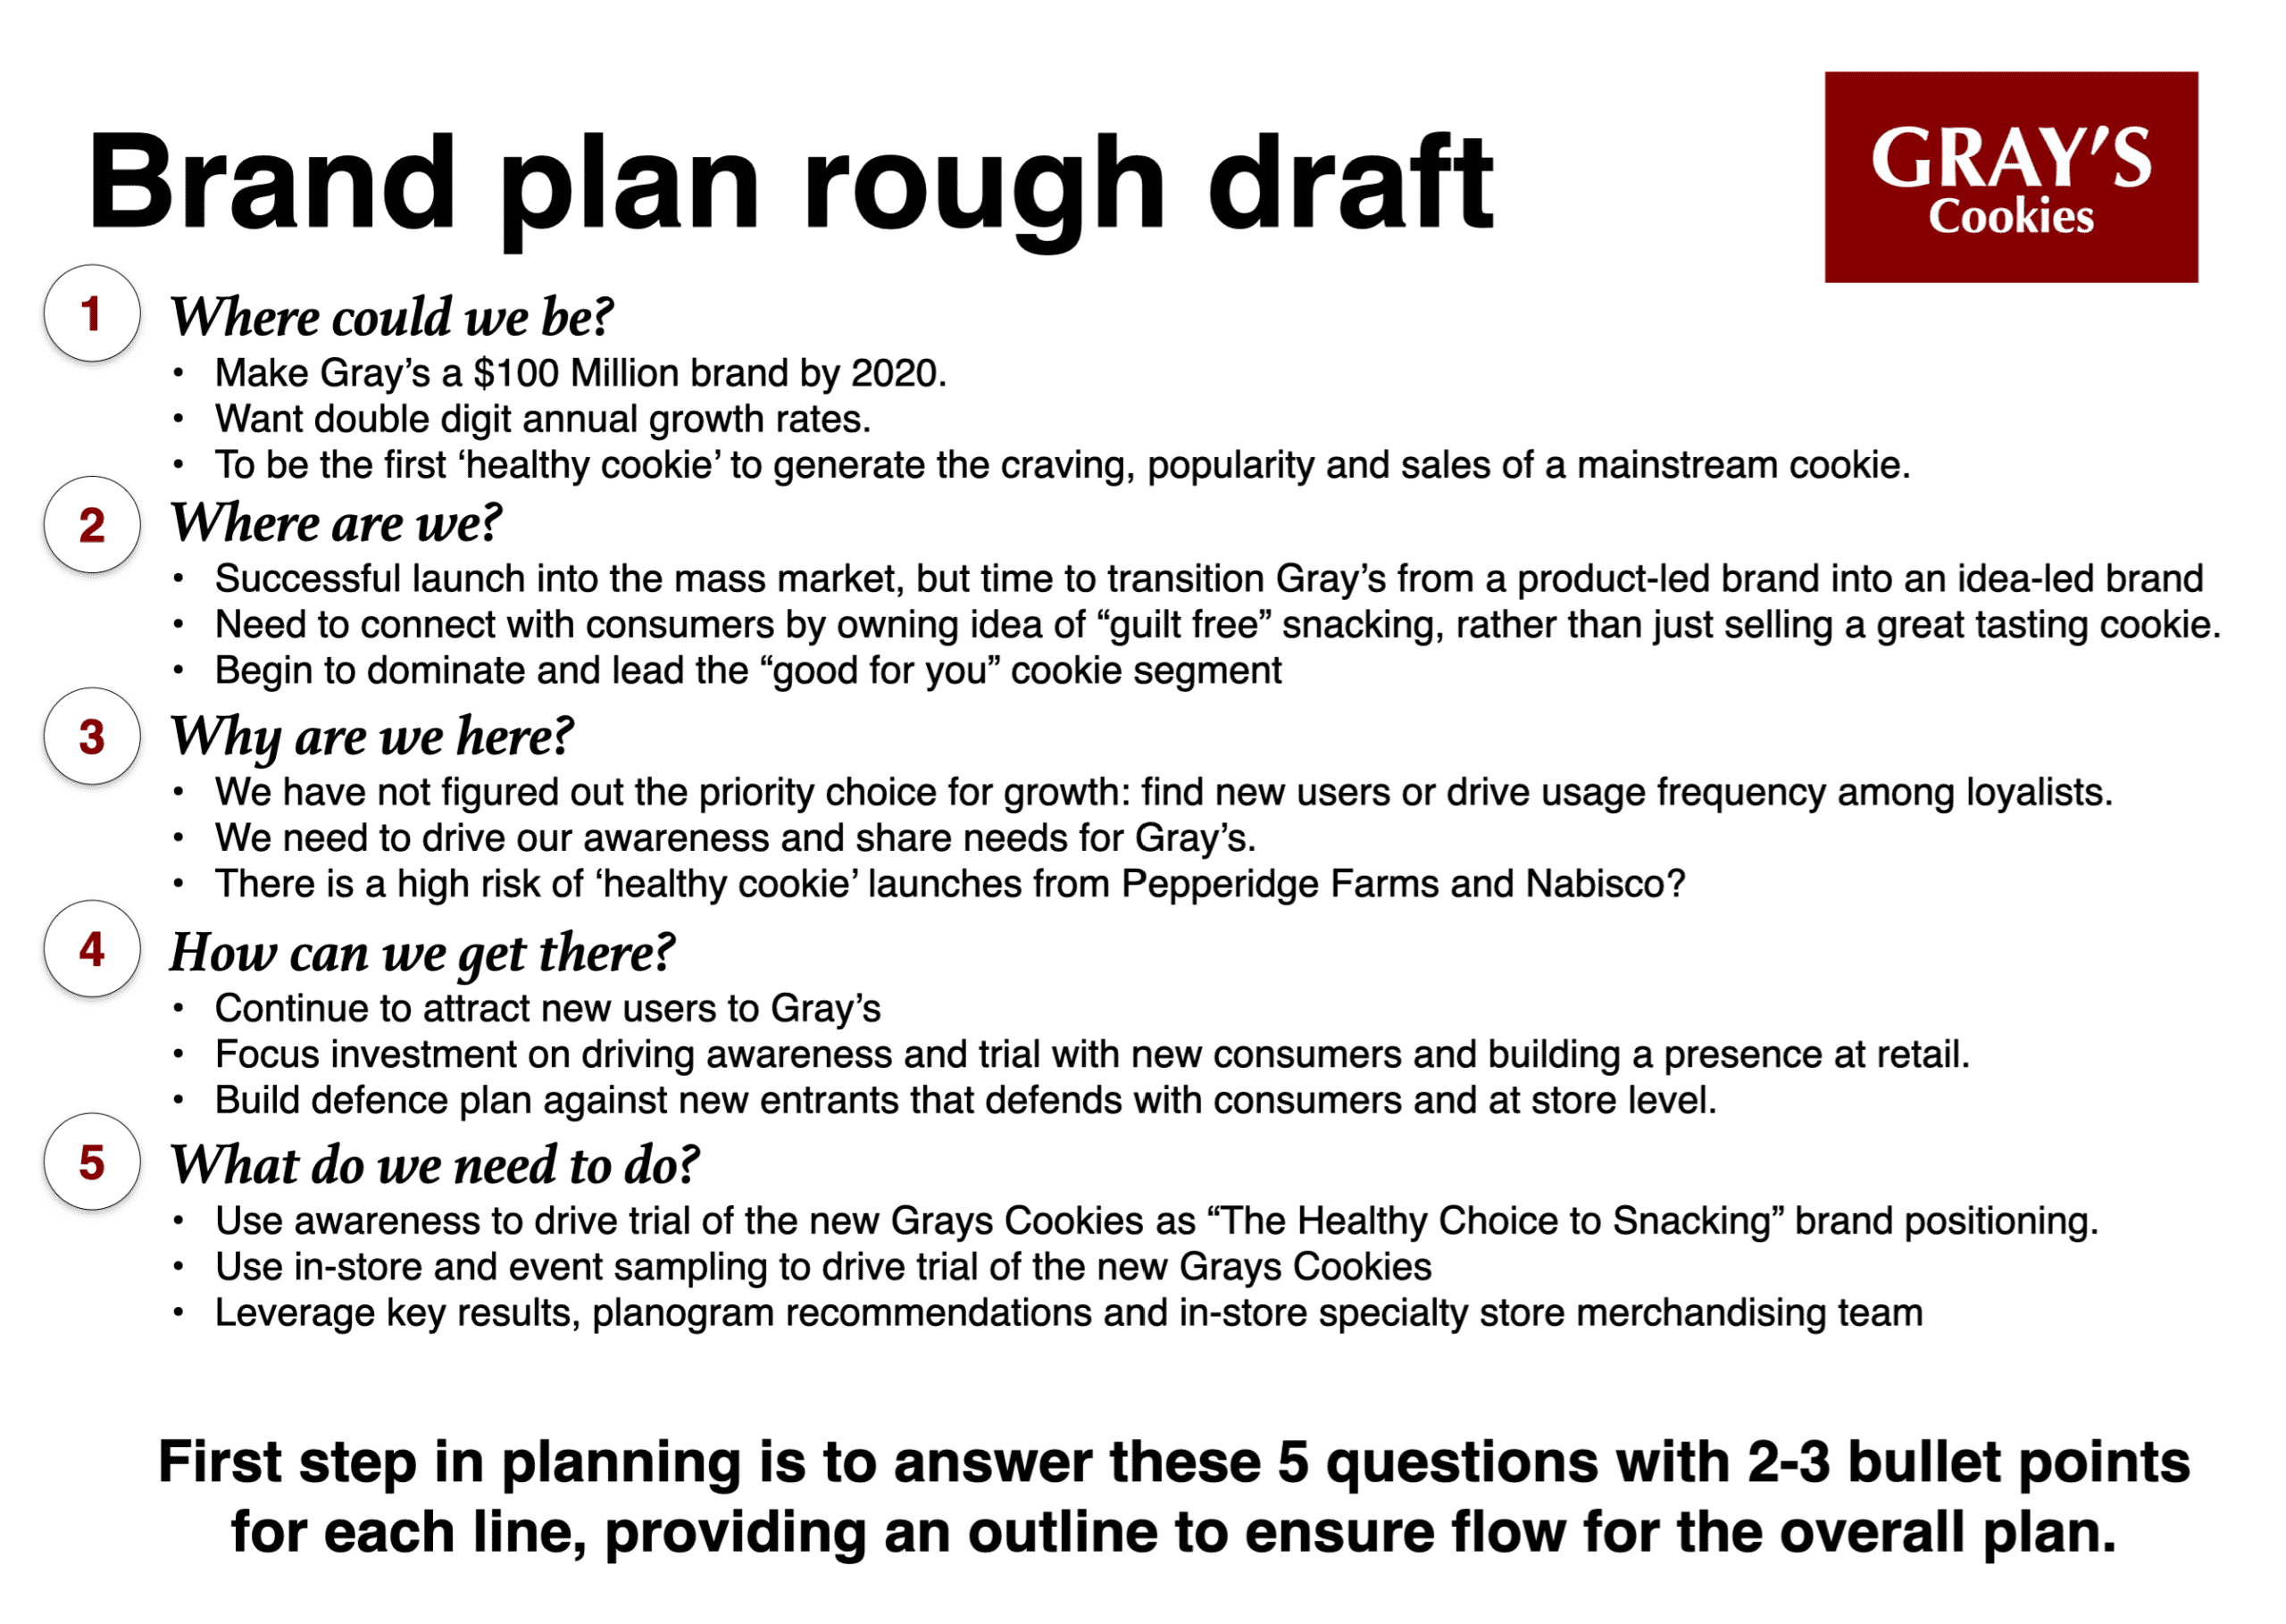 Brand Plan rough draft helps kickstart your brand planning process